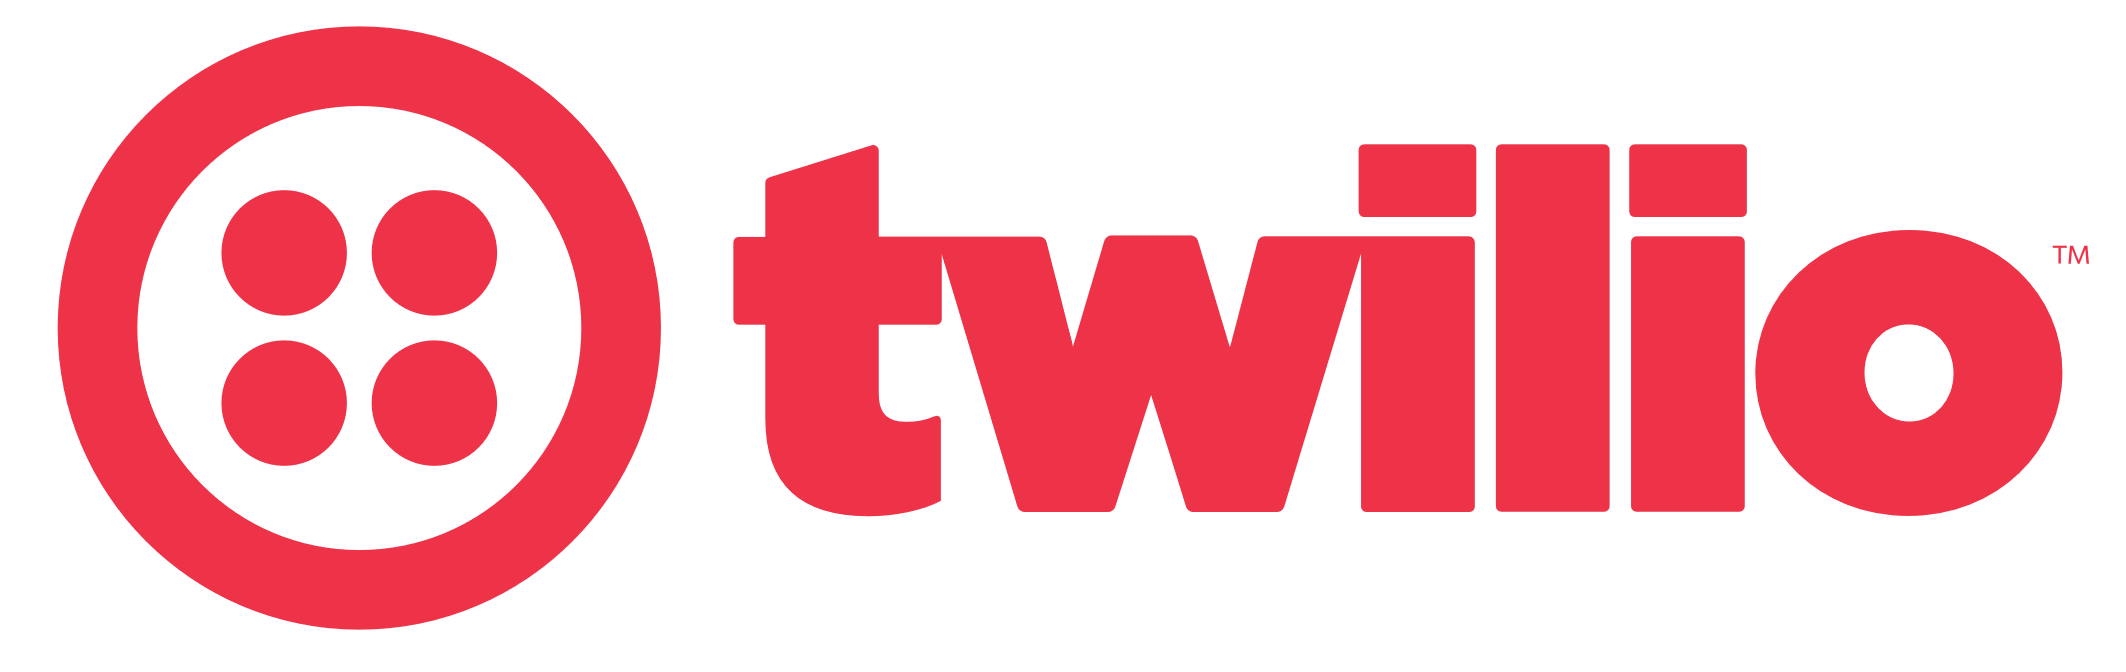 Twilio_logo